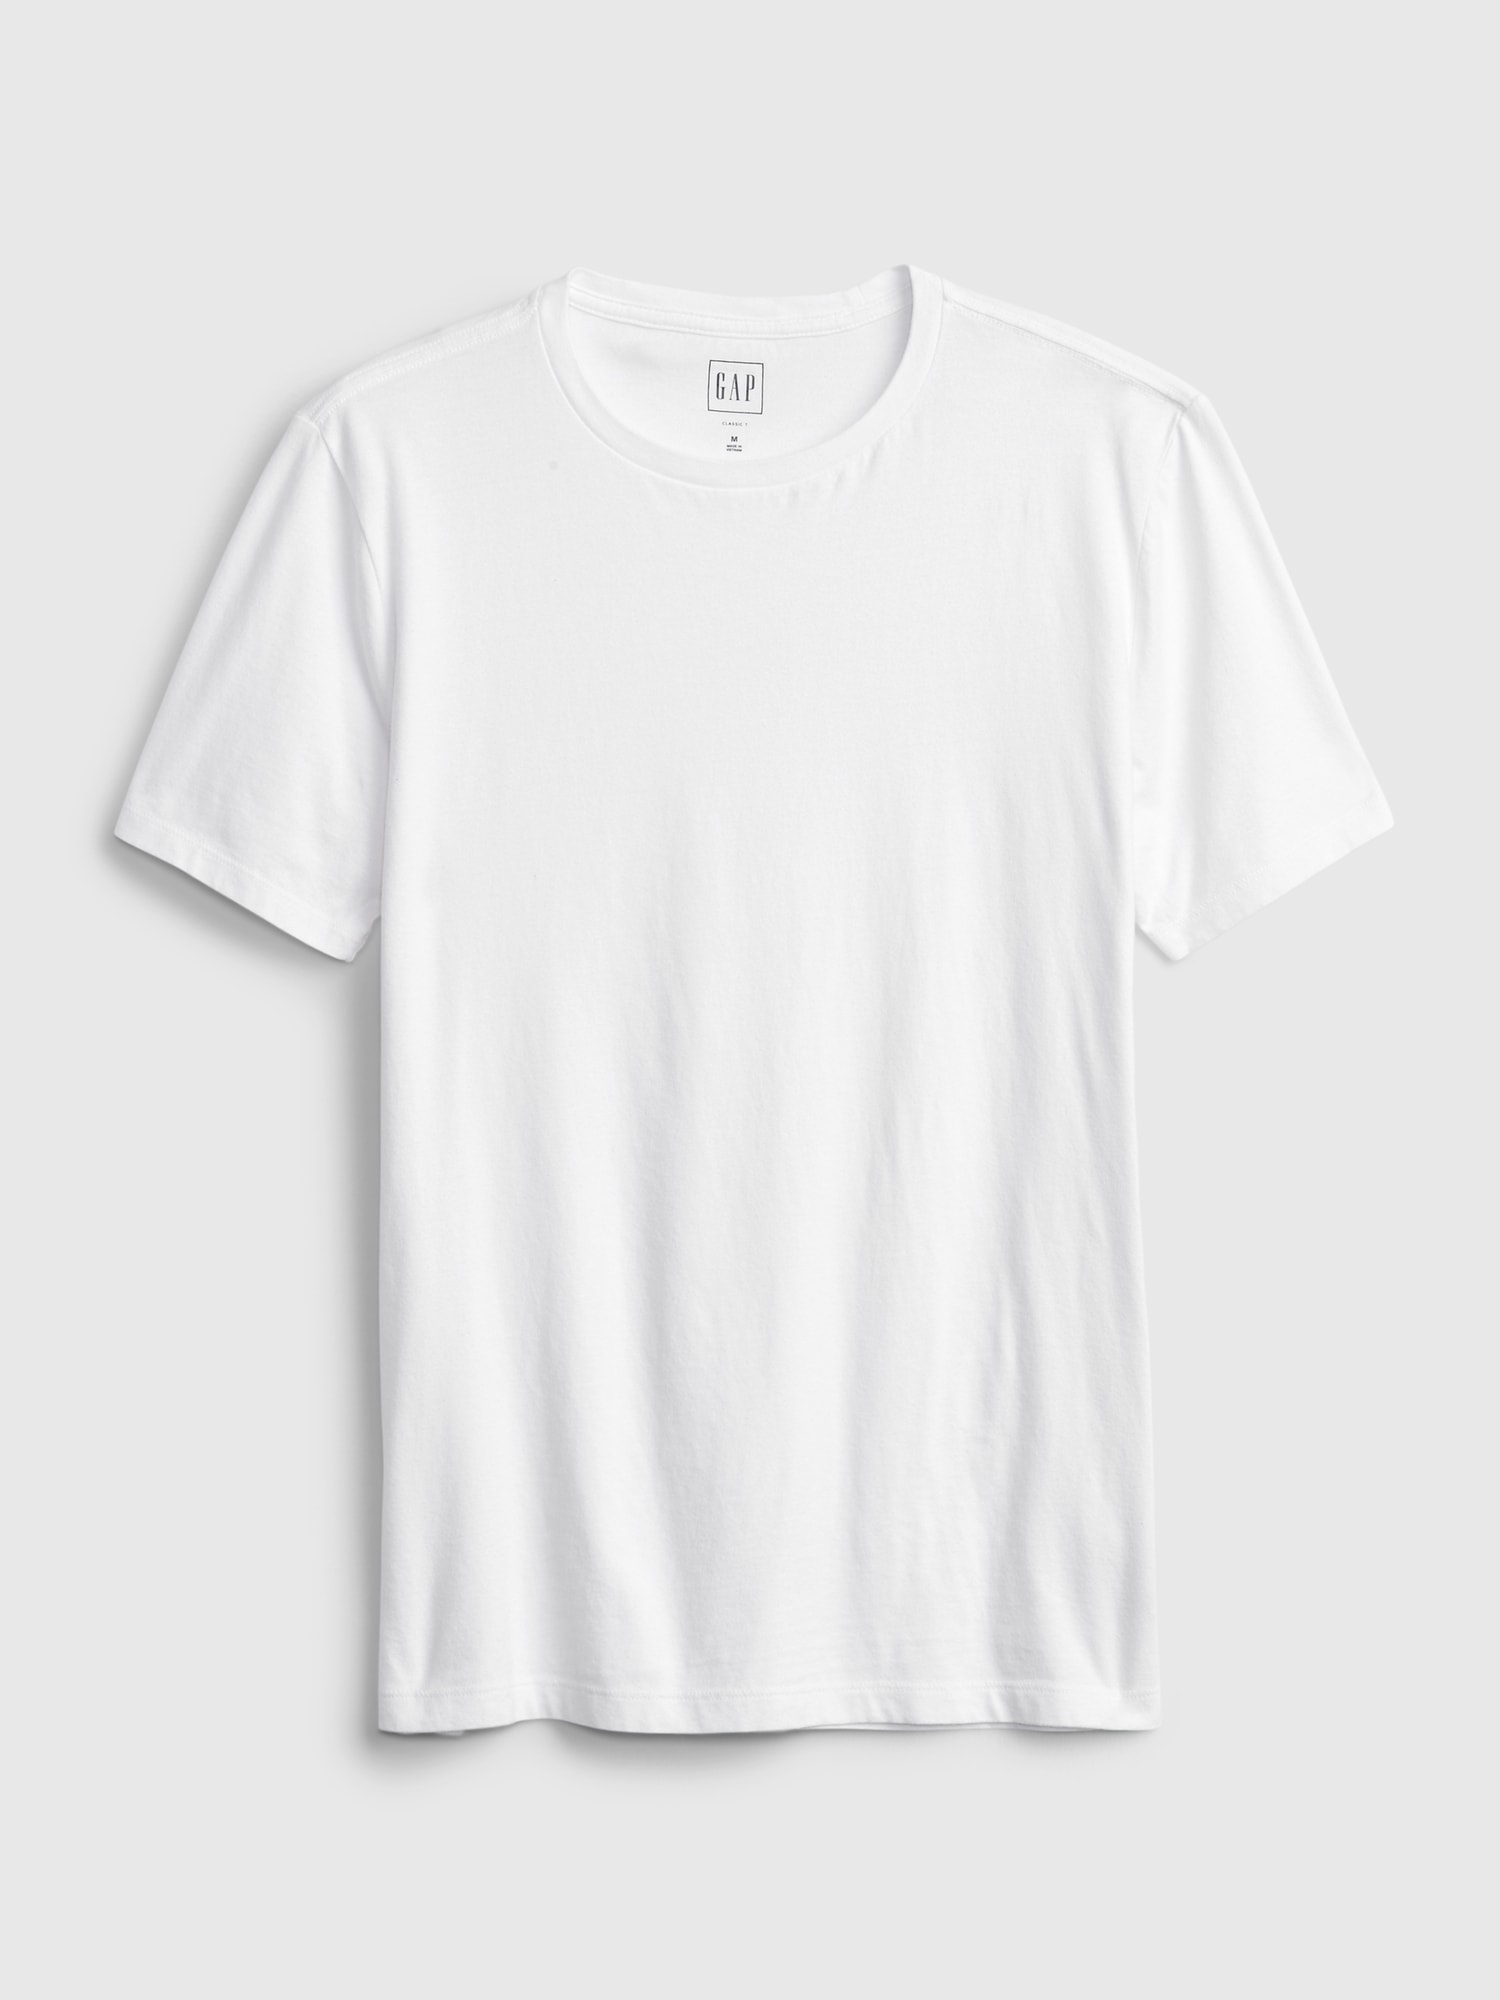 Buy > black shirt white shirt > in stock